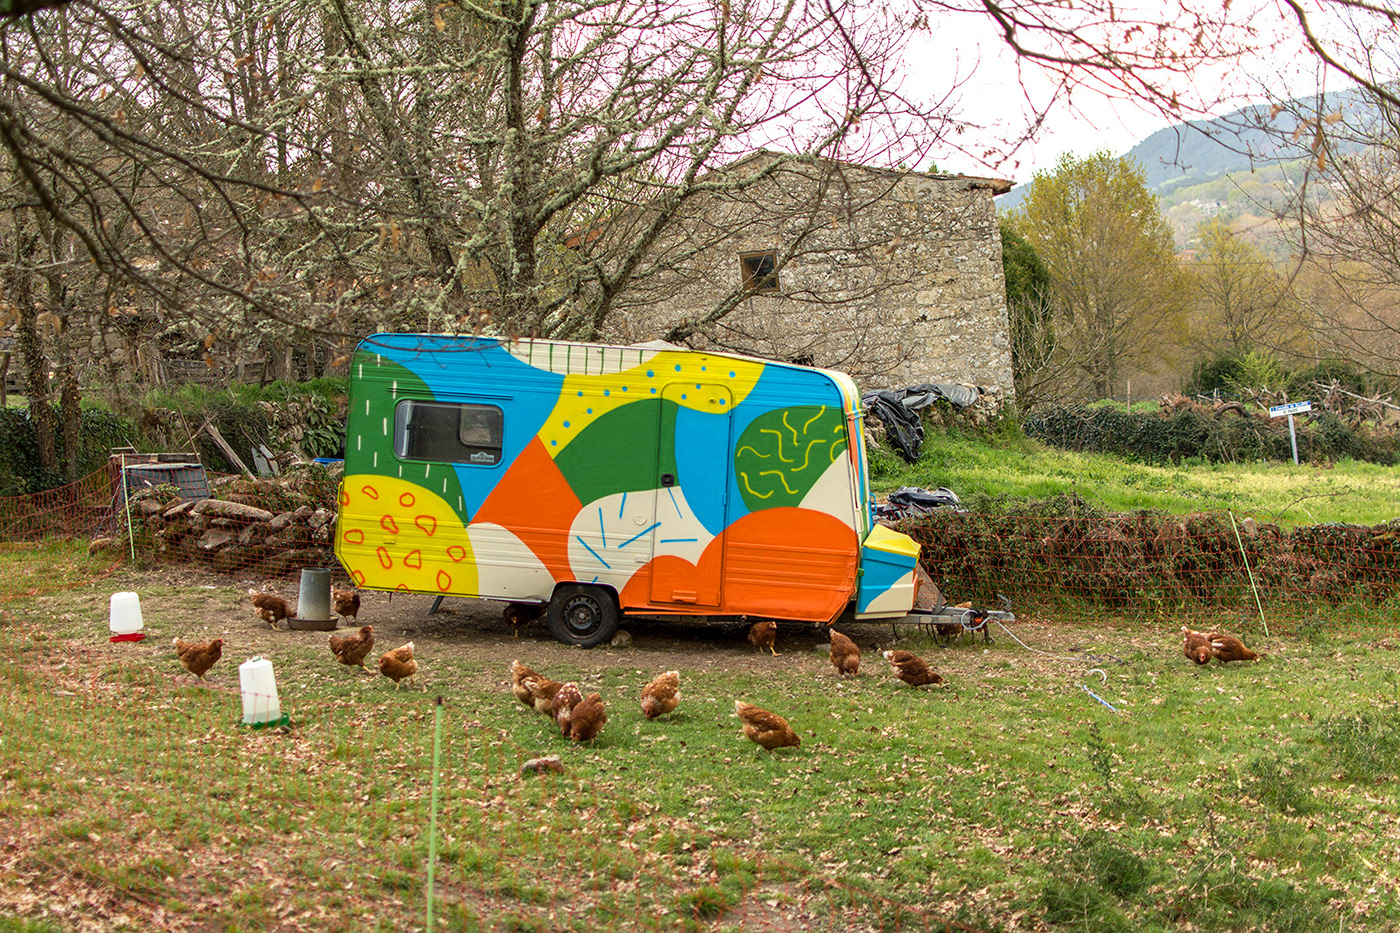 henhouse chicken pattern spraypaint rural countryside painting   streetart Urbanart roulotte